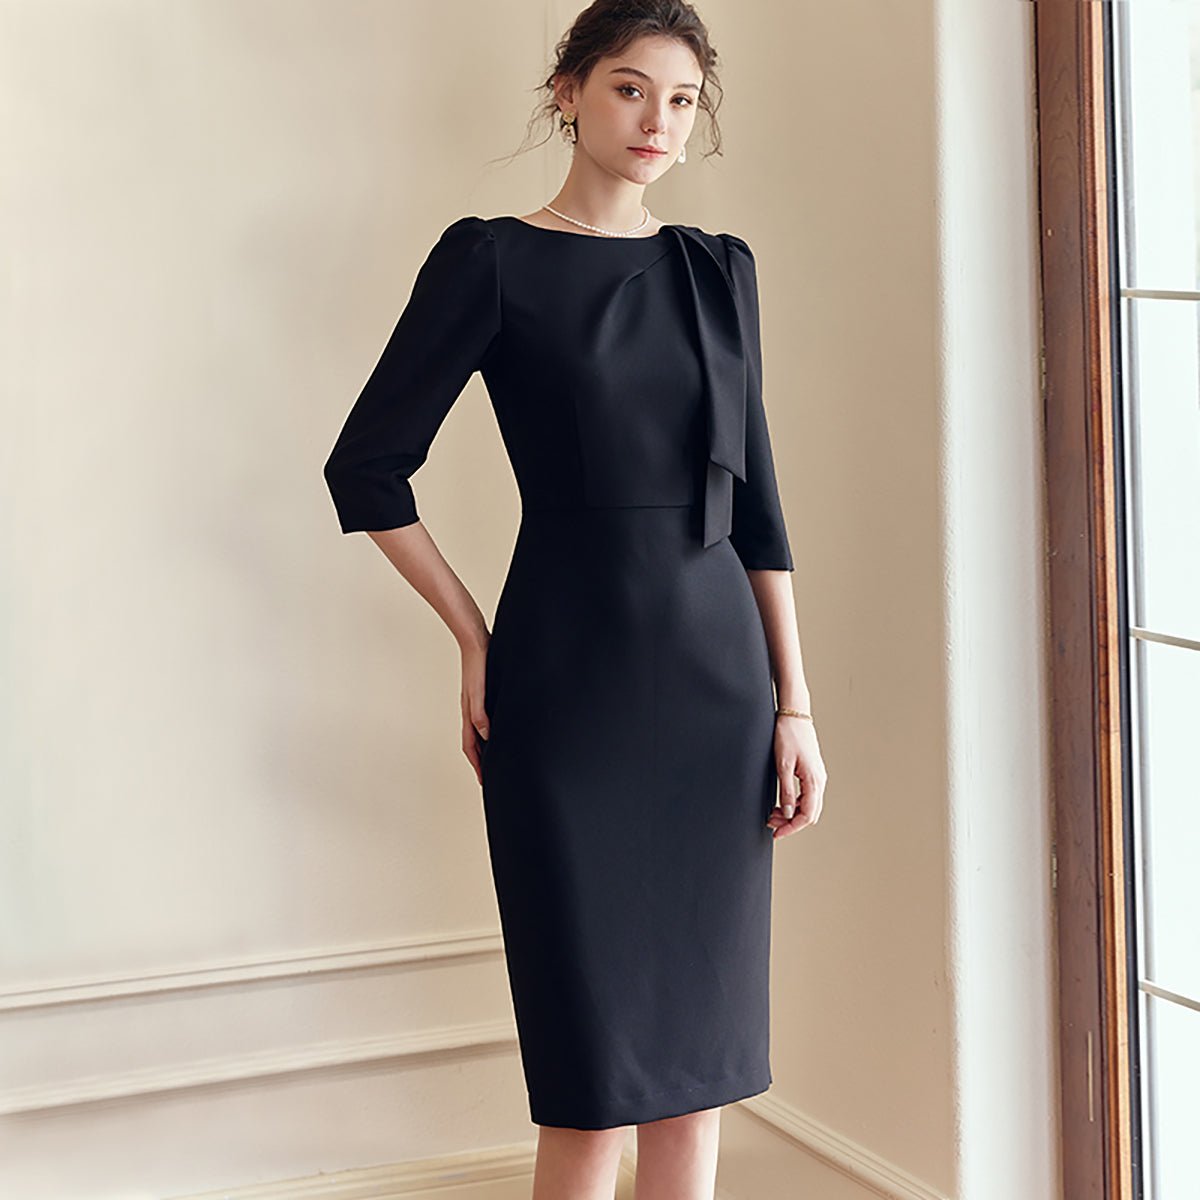 Pretty Knee-Length Black Dress